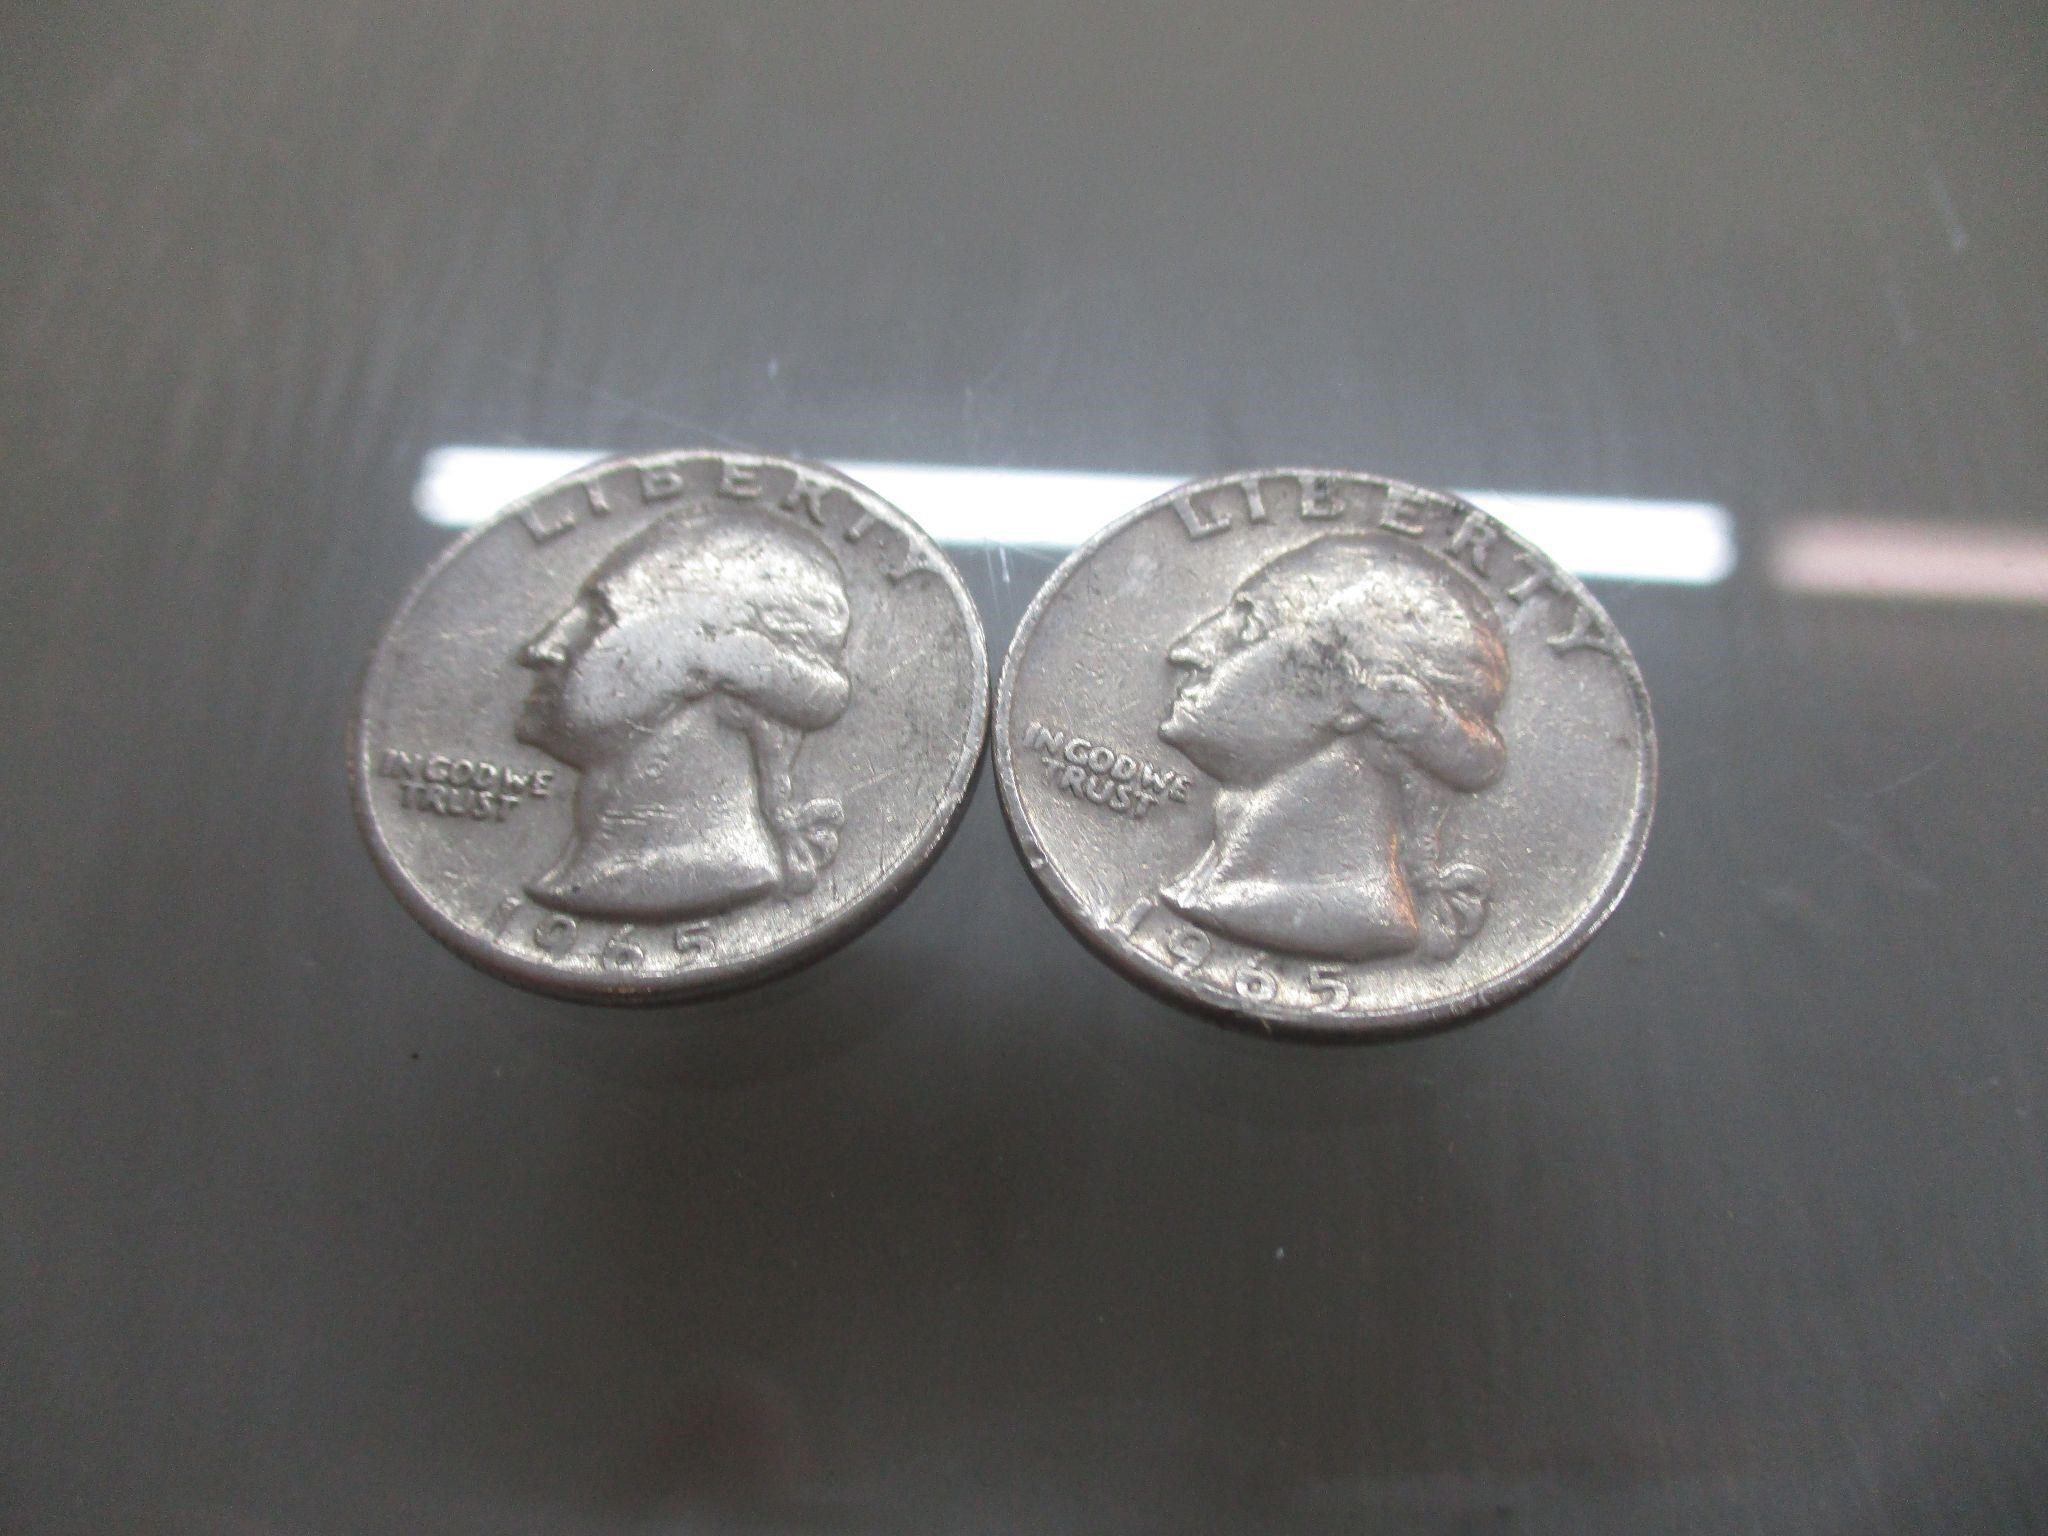 2 Partial Silver Quarters - both 1965